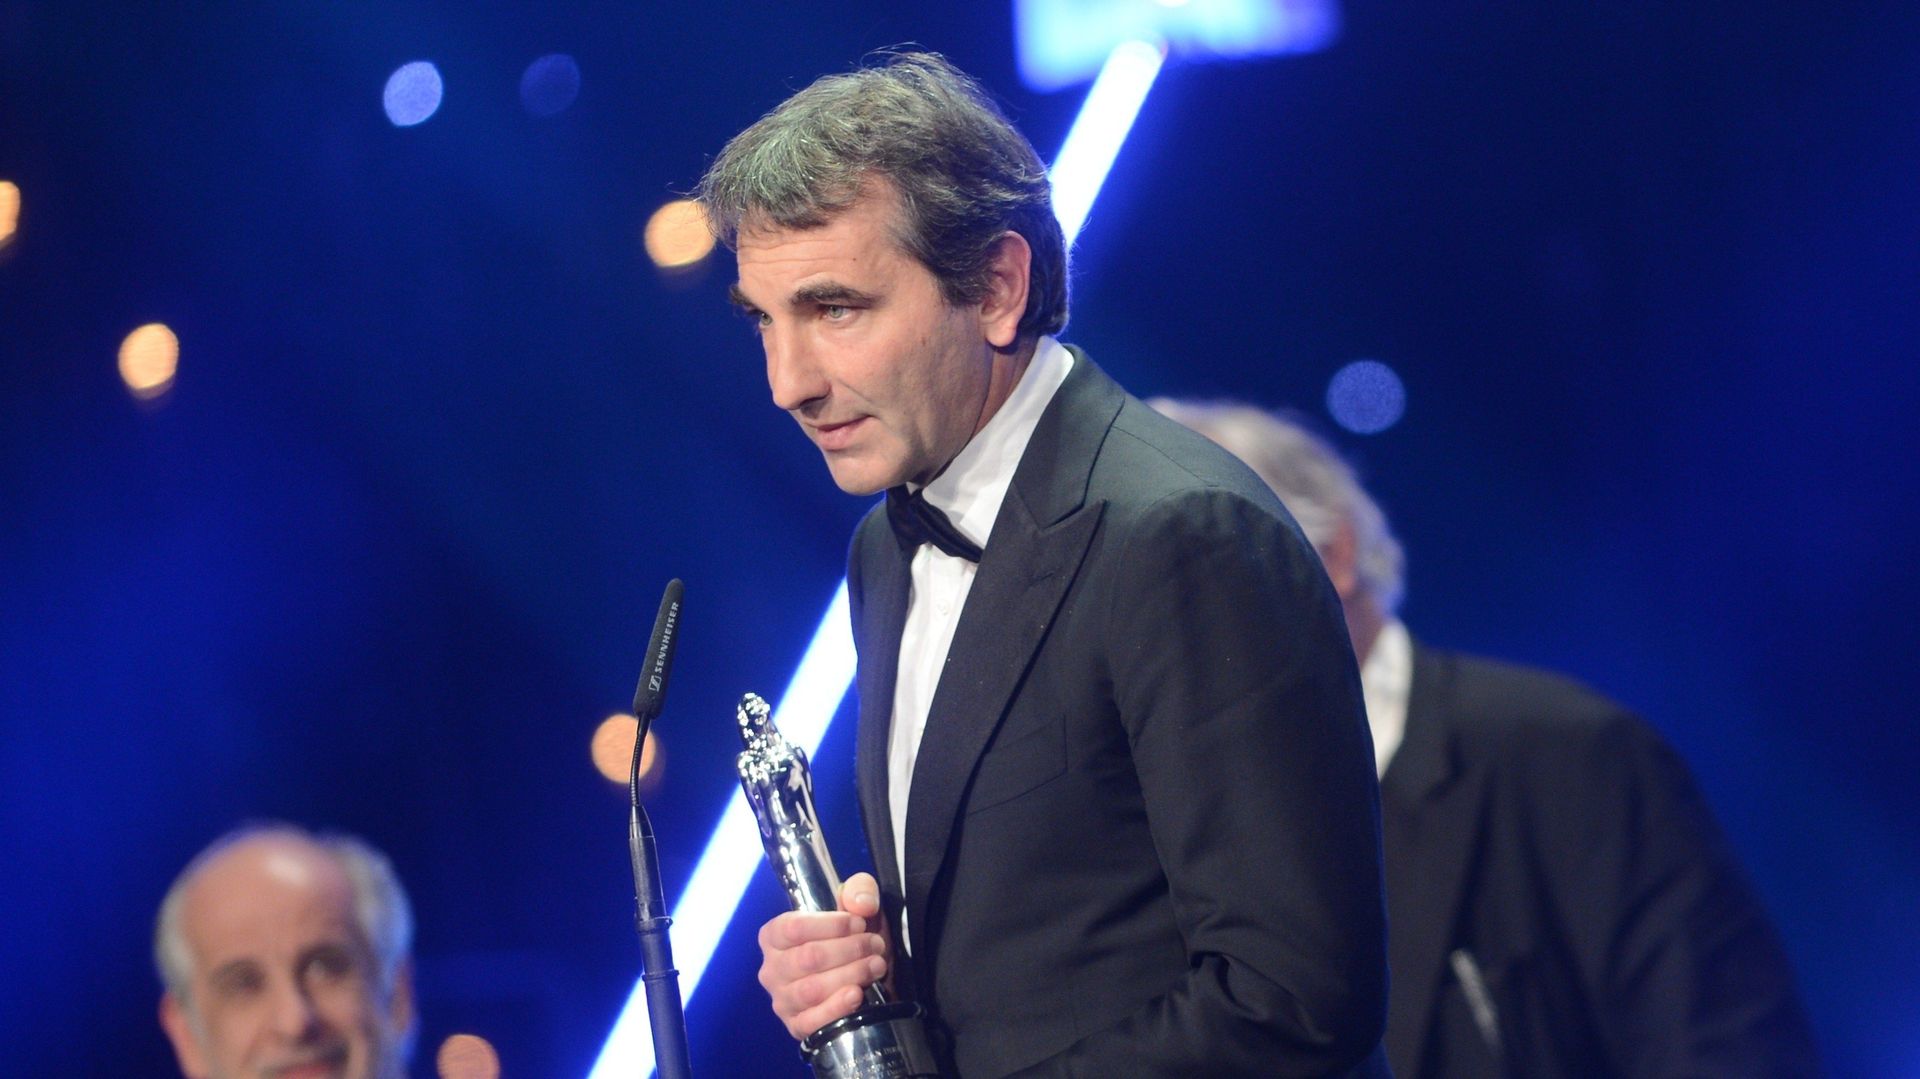 European Film Awards - "La Grande Belleza" de Sorrentino, désigné meilleur film européen